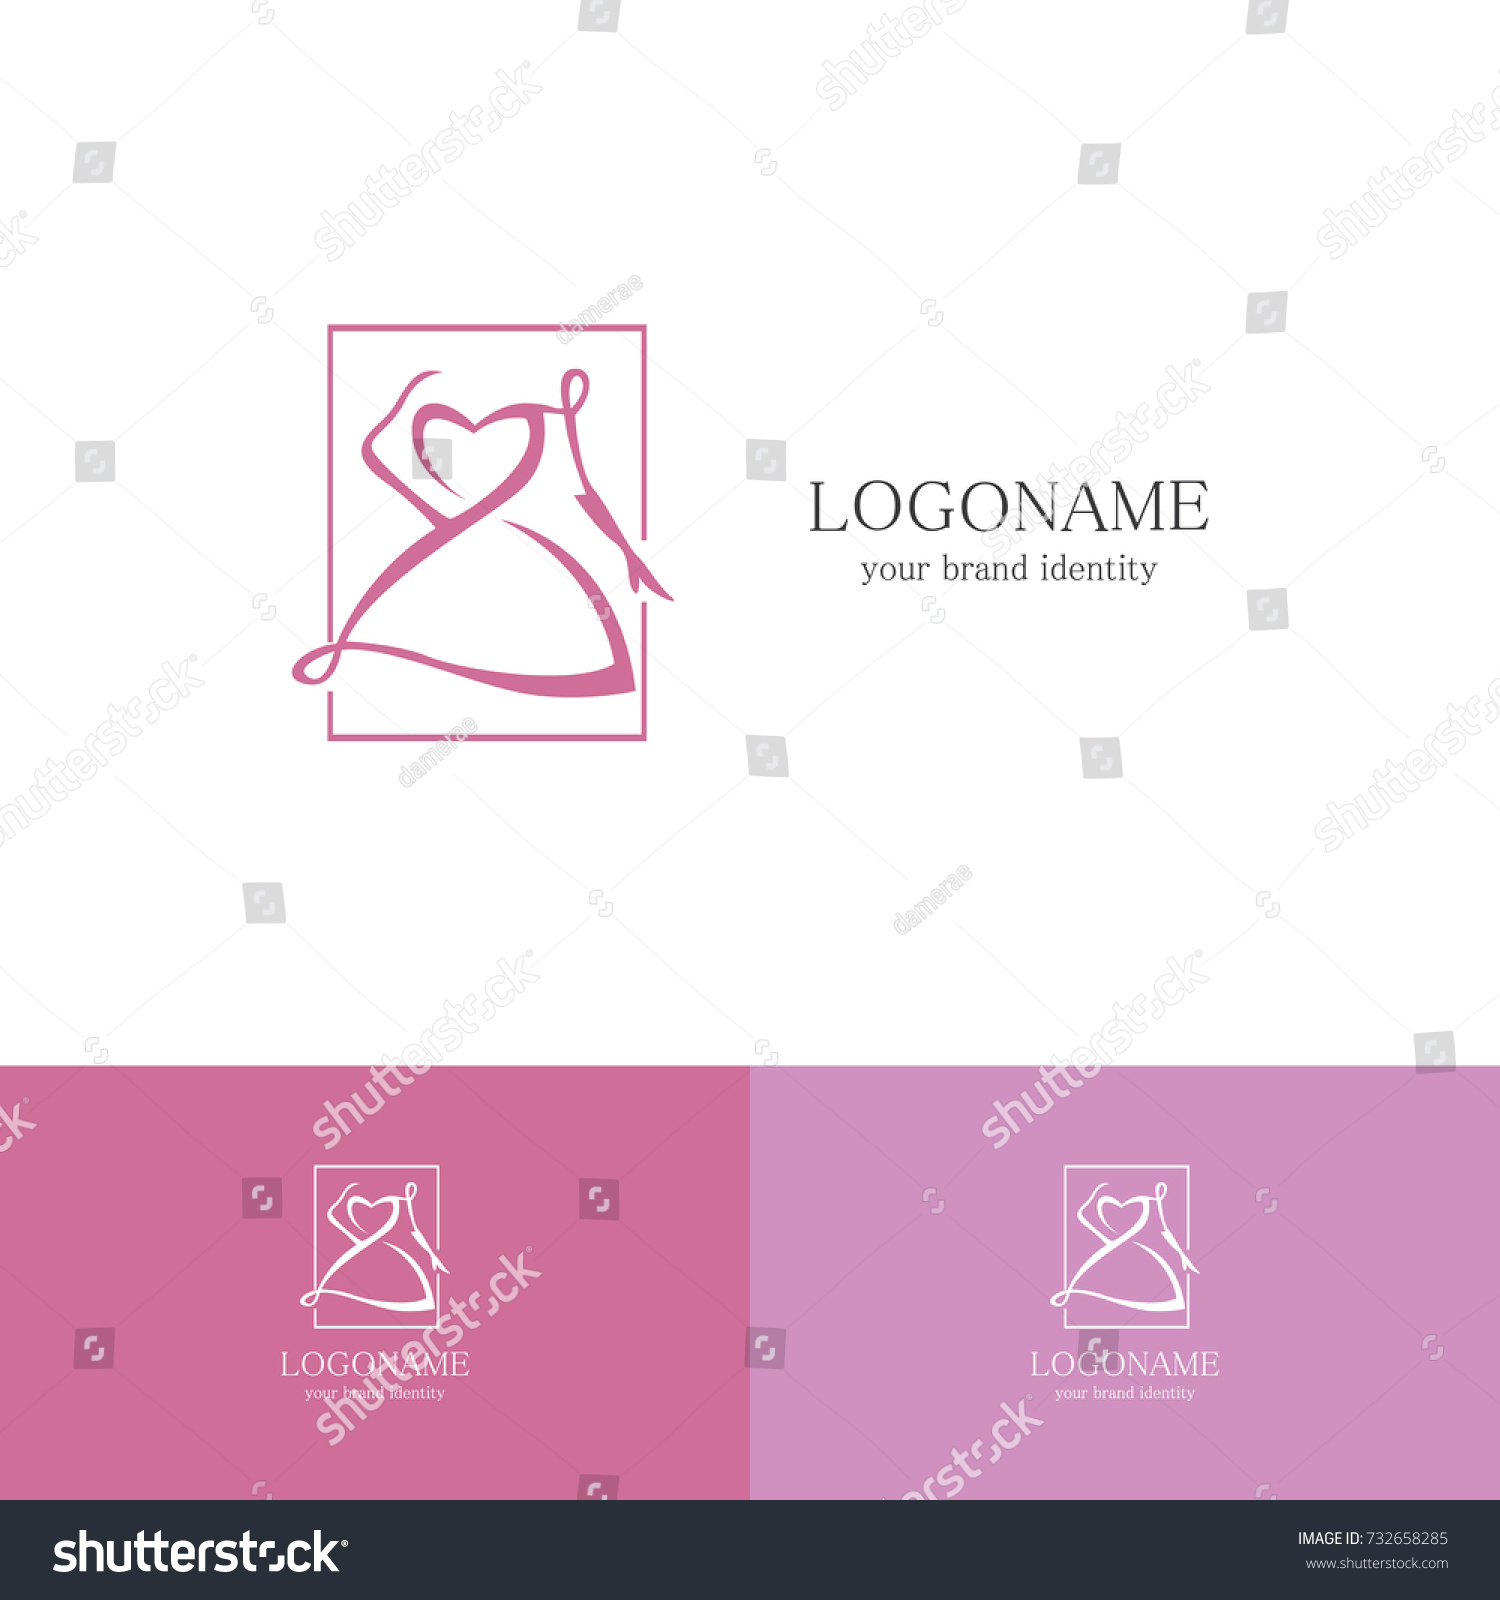 95,257 Woman cloth logo Images, Stock Photos & Vectors | Shutterstock